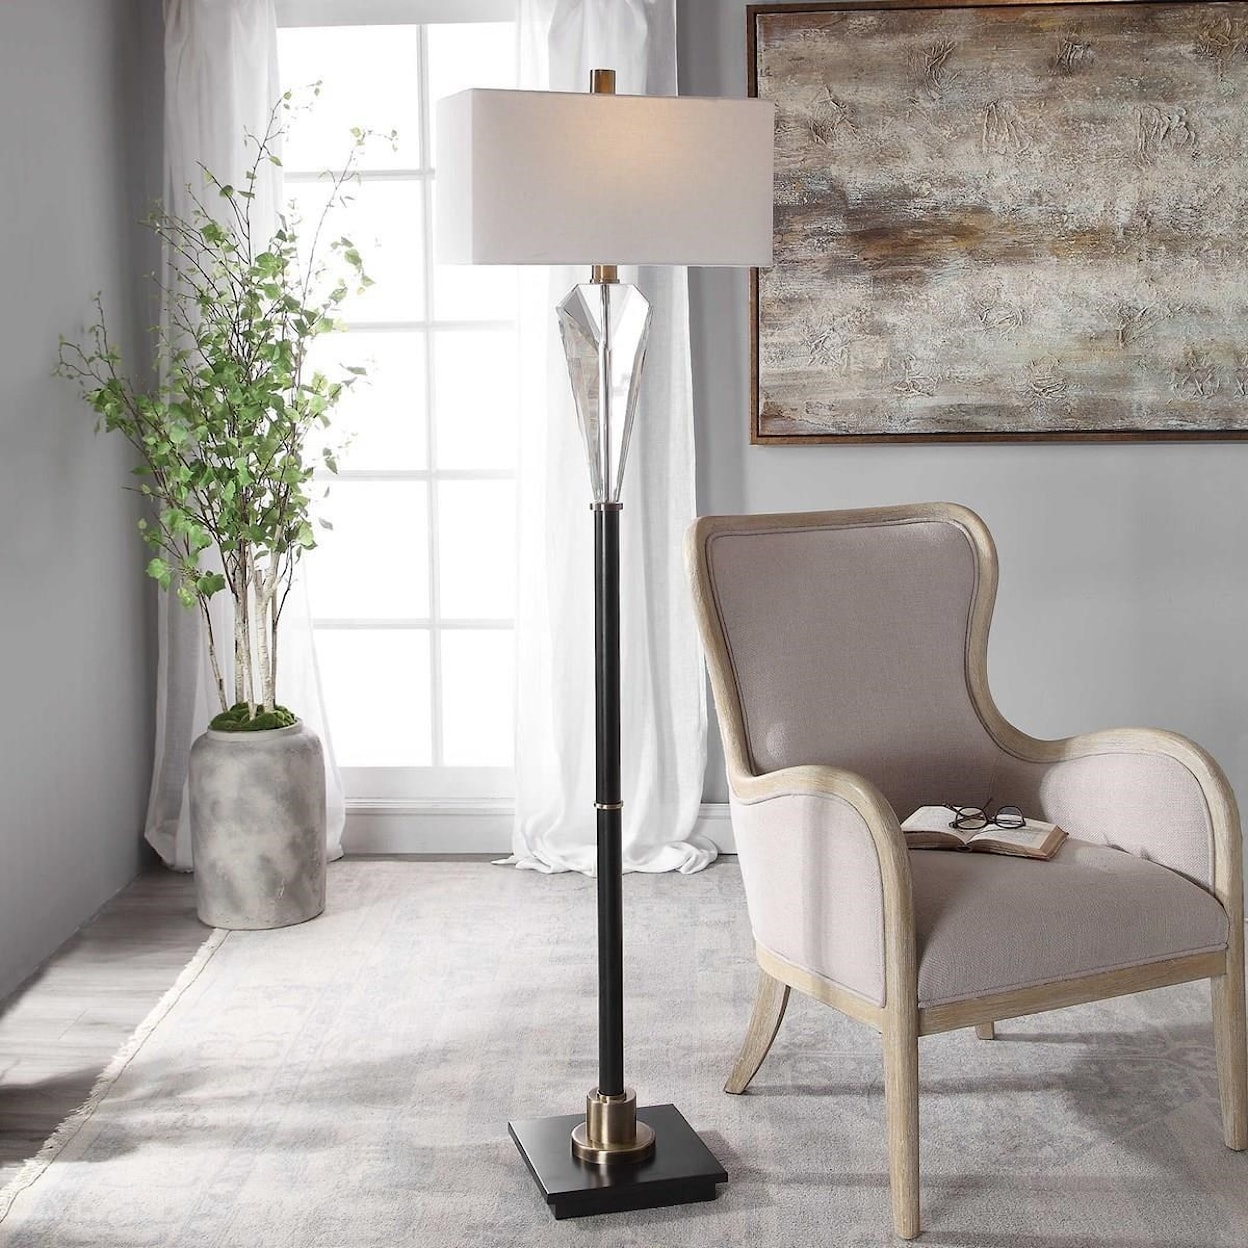 Uttermost Floor Lamps Cora Contemporary Floor Lamp